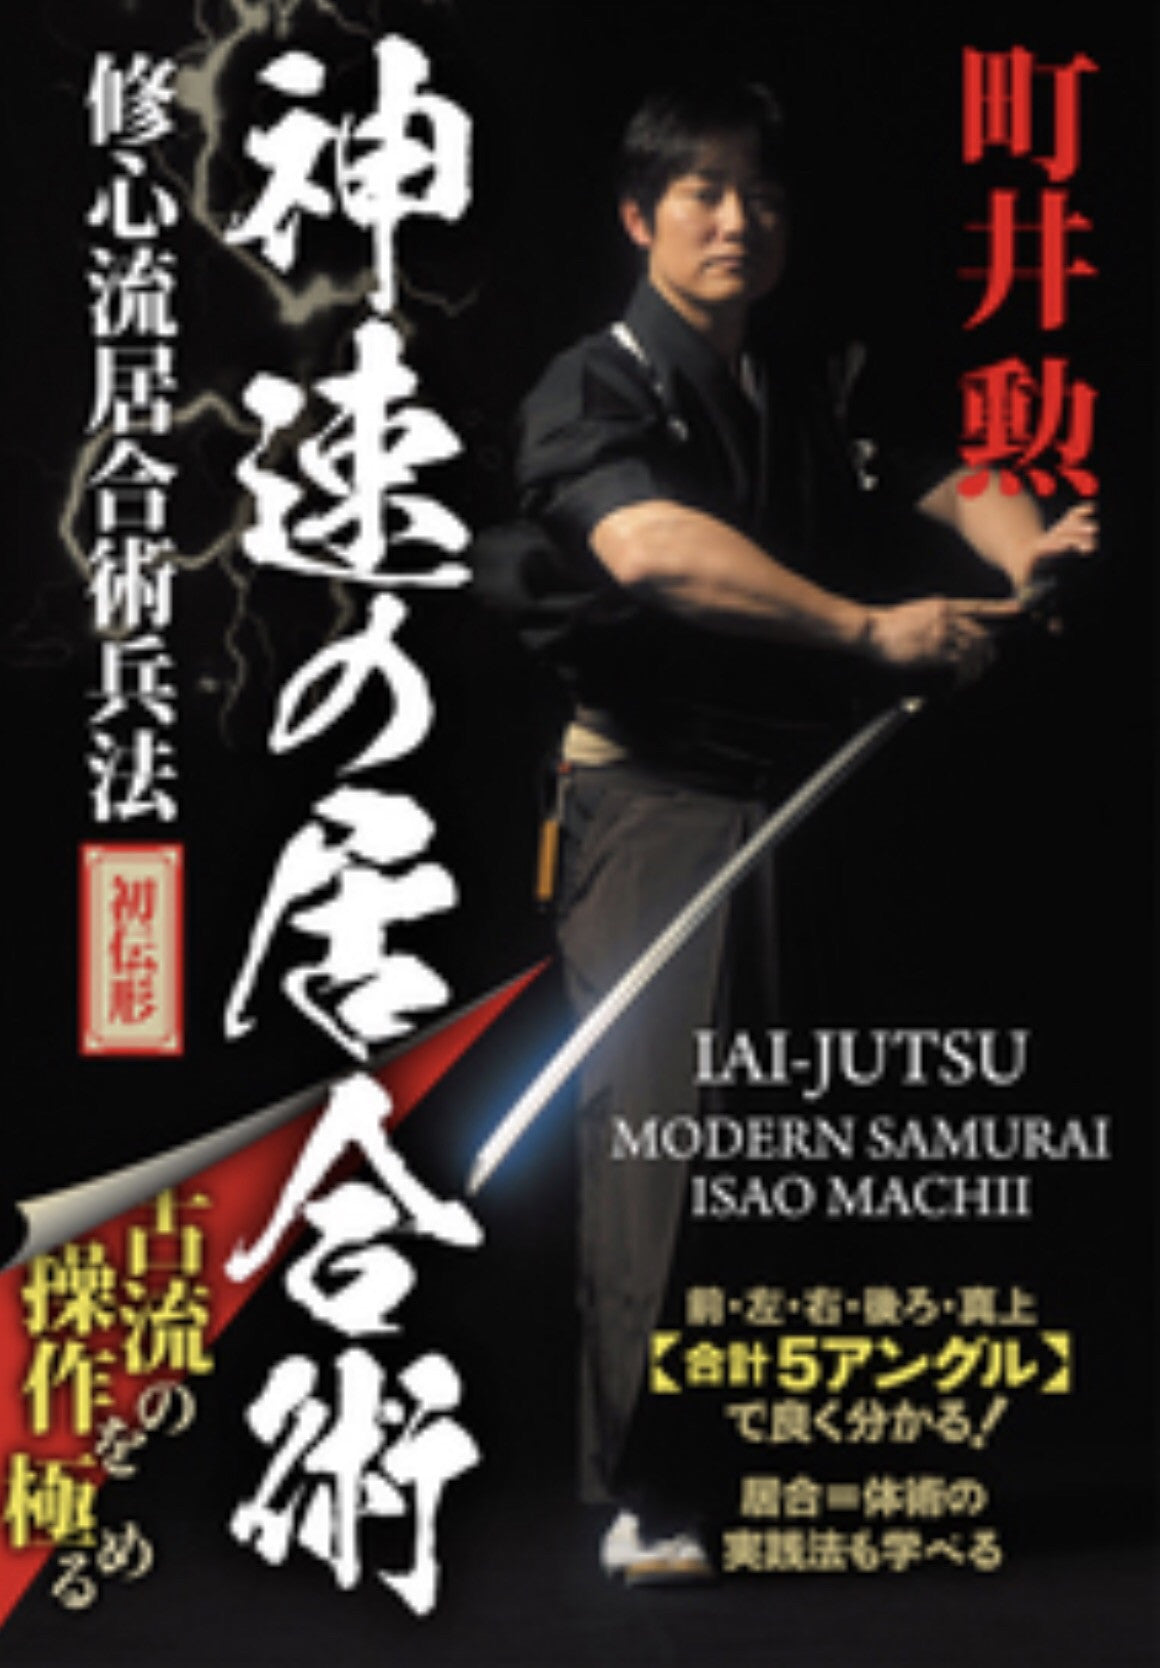 Iai-Jutsu Modern Day Samurai by Isao Machii - Budovideos Inc